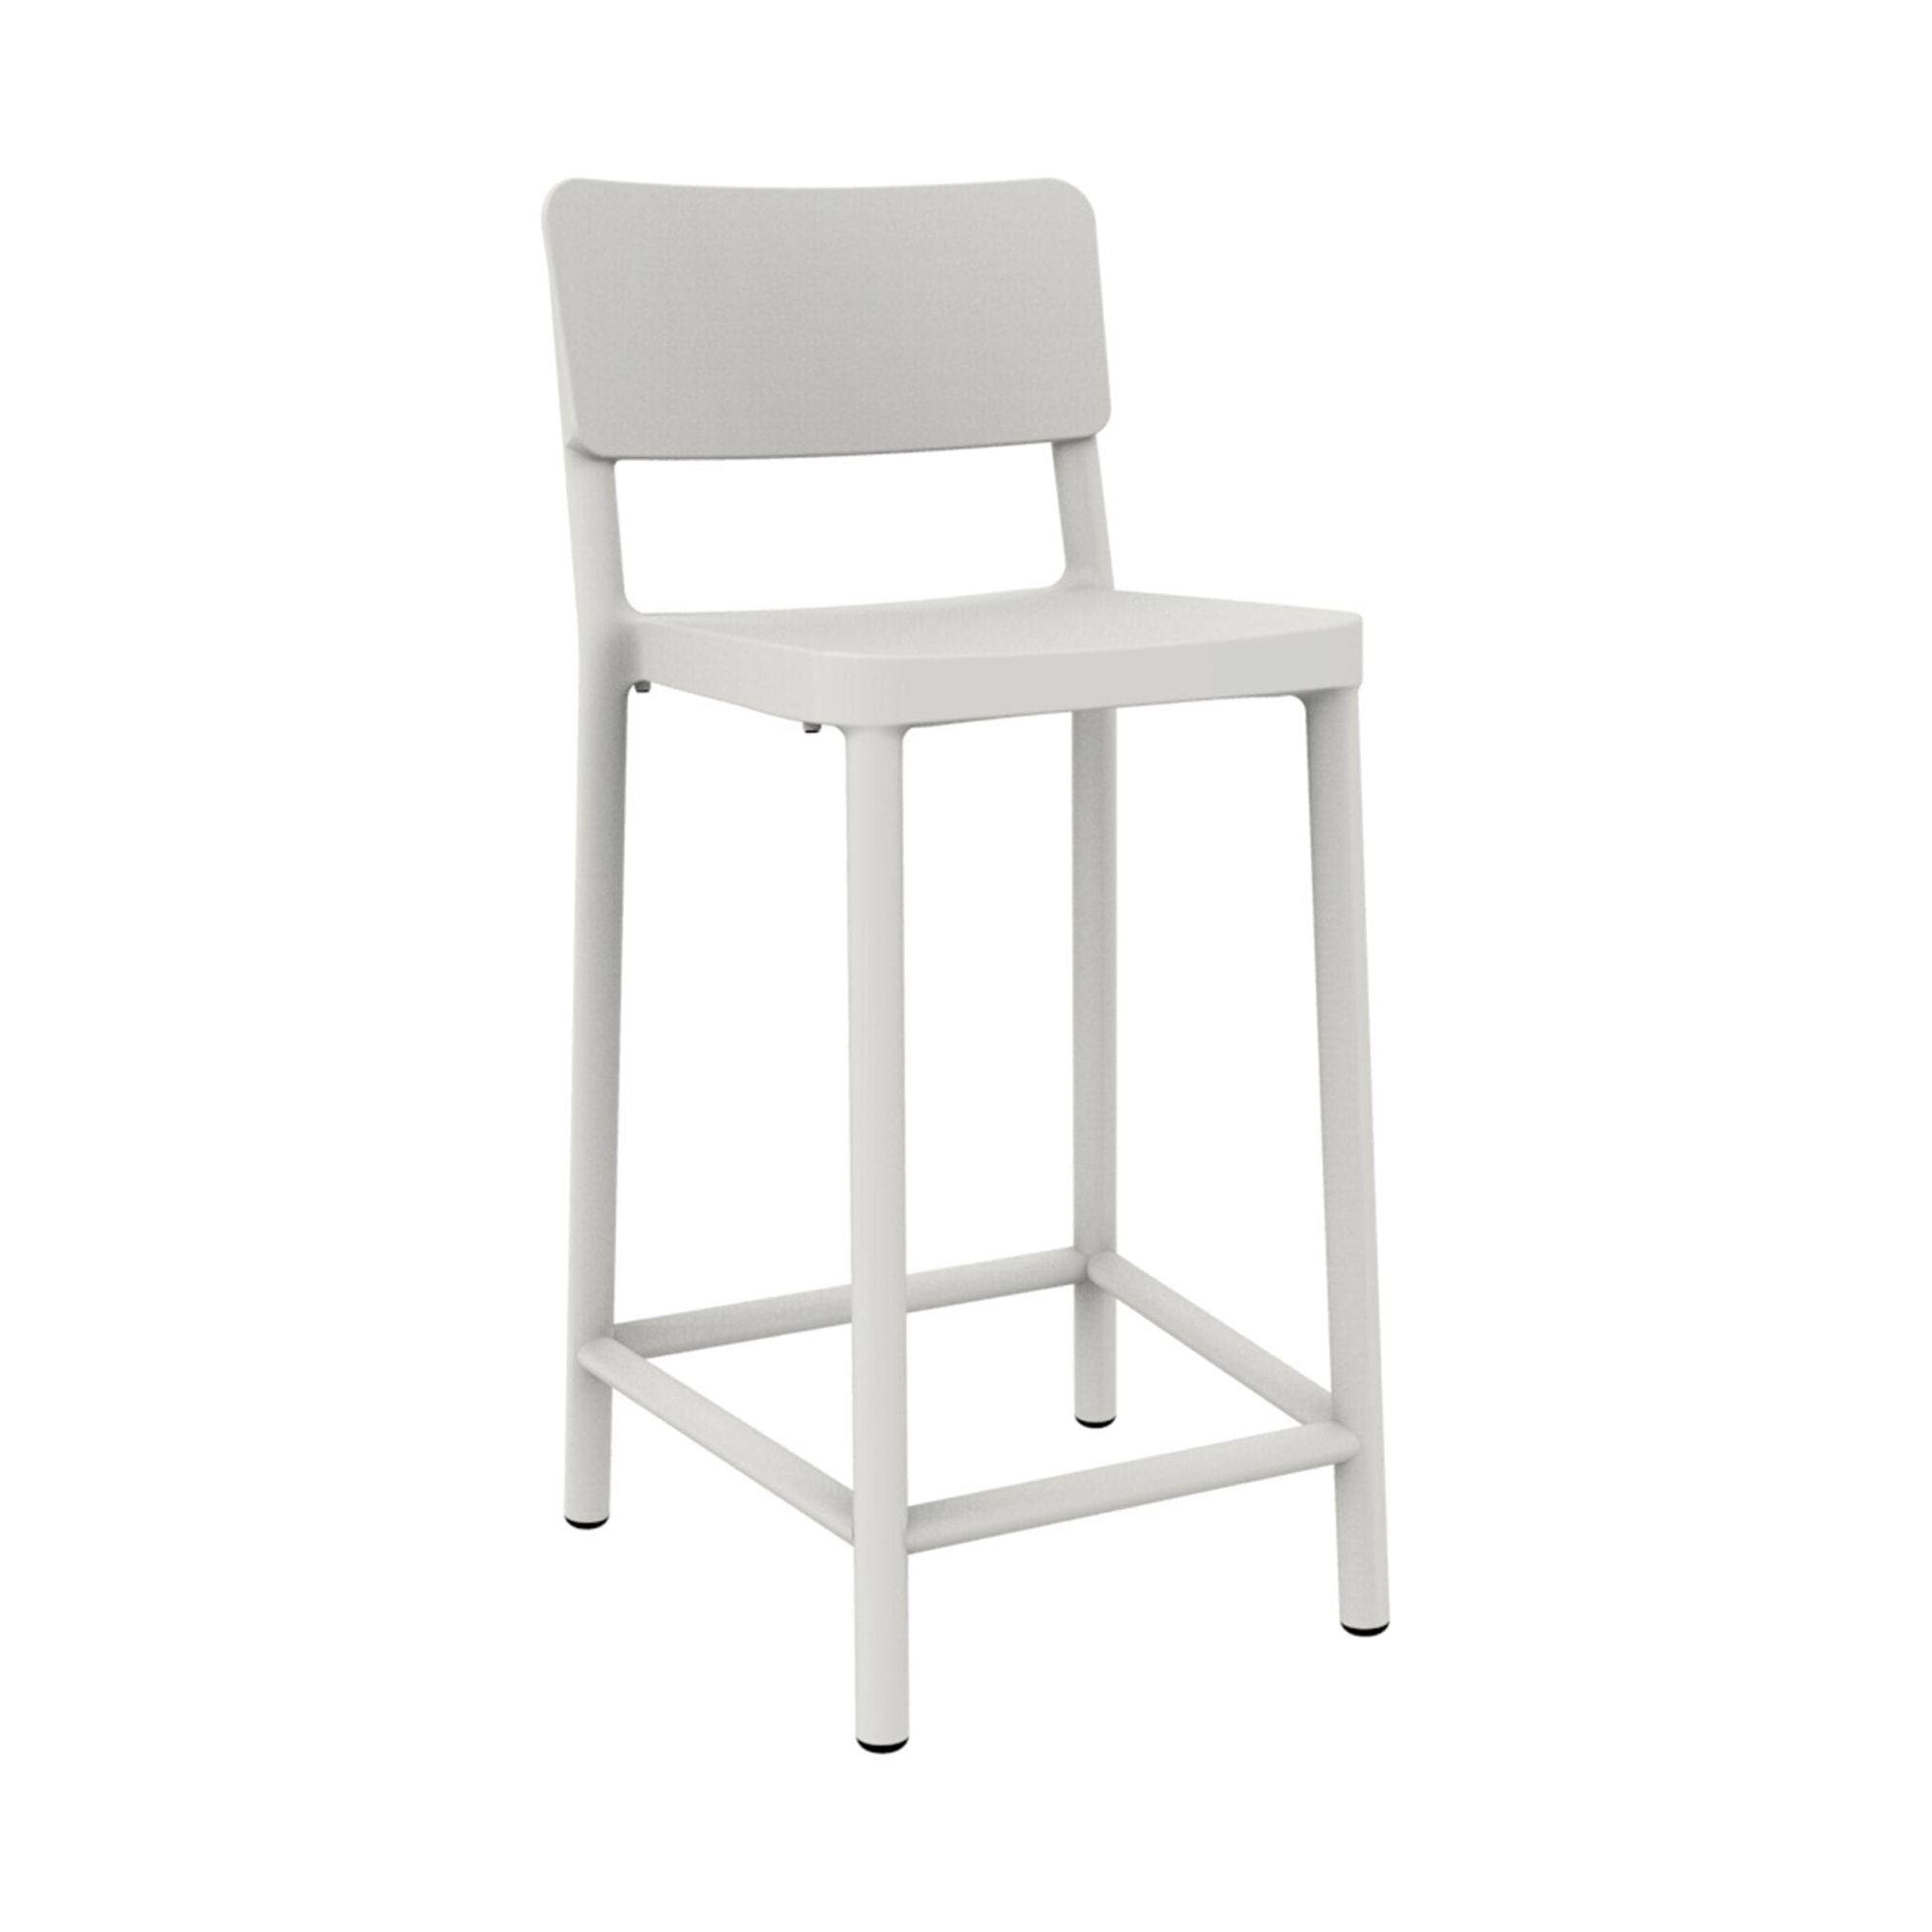 Resol lisboa medium stool inside, white outside